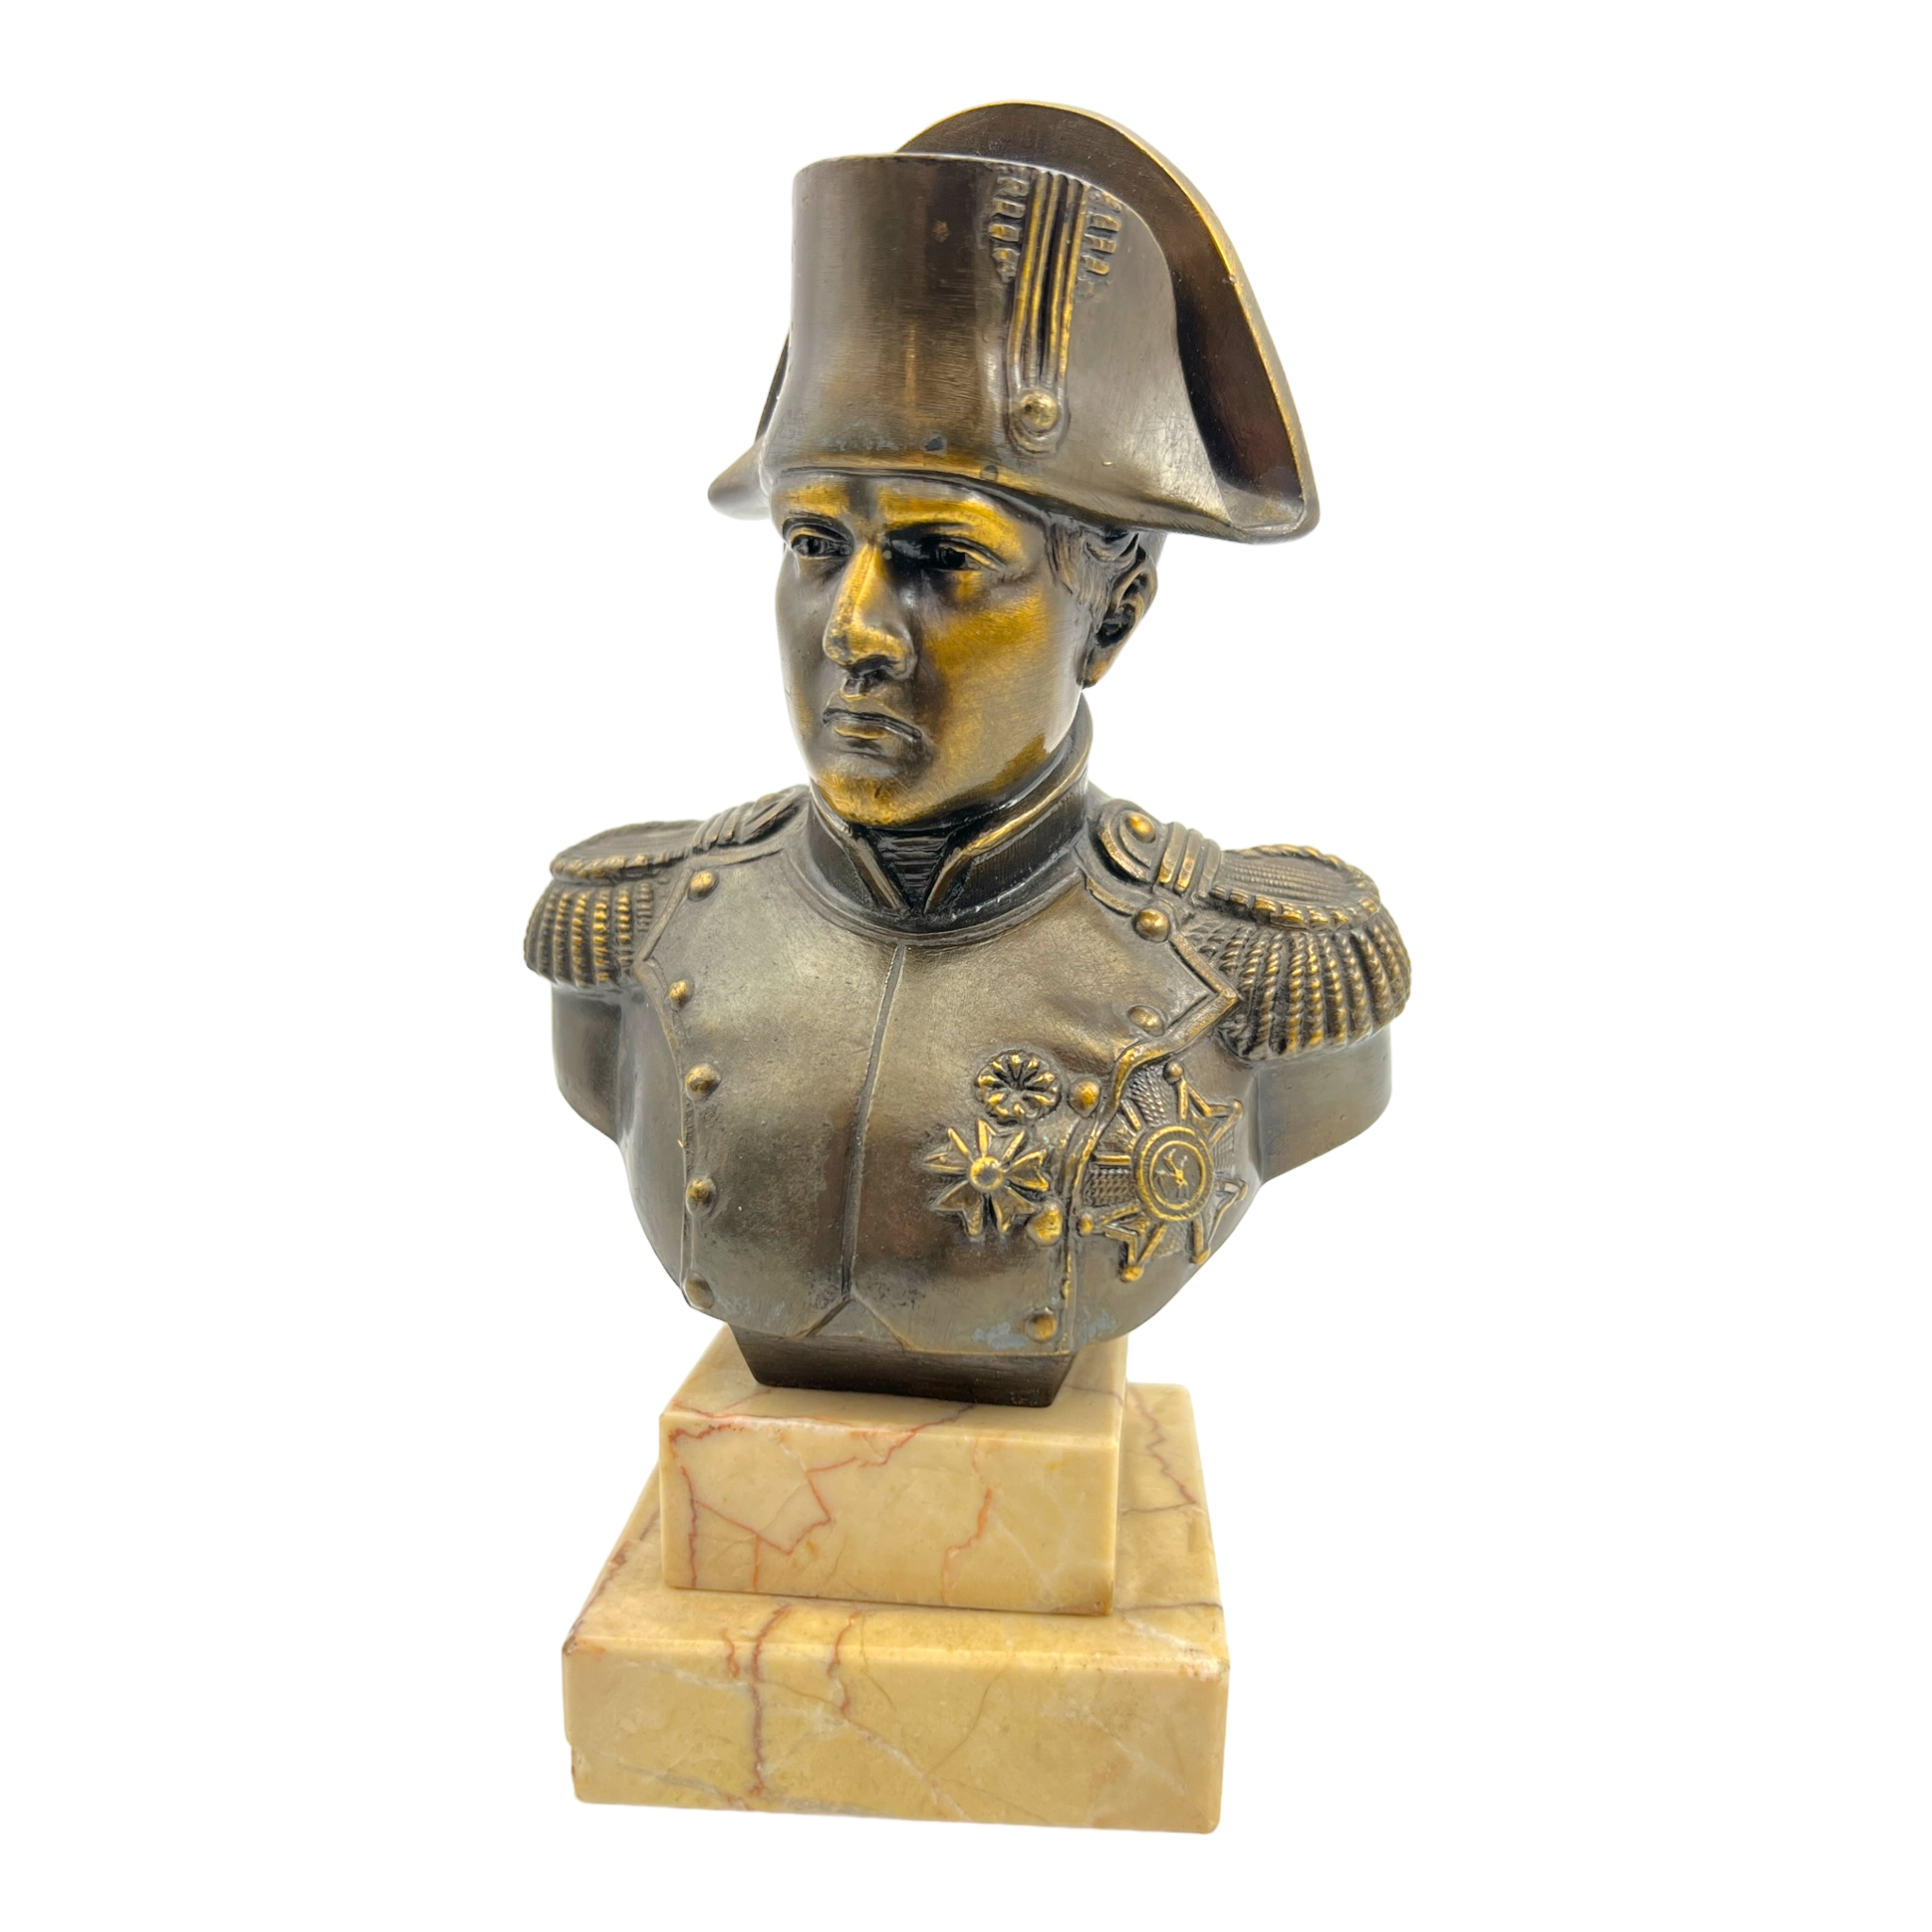 Vintage Cast Metal Napoleon Bust